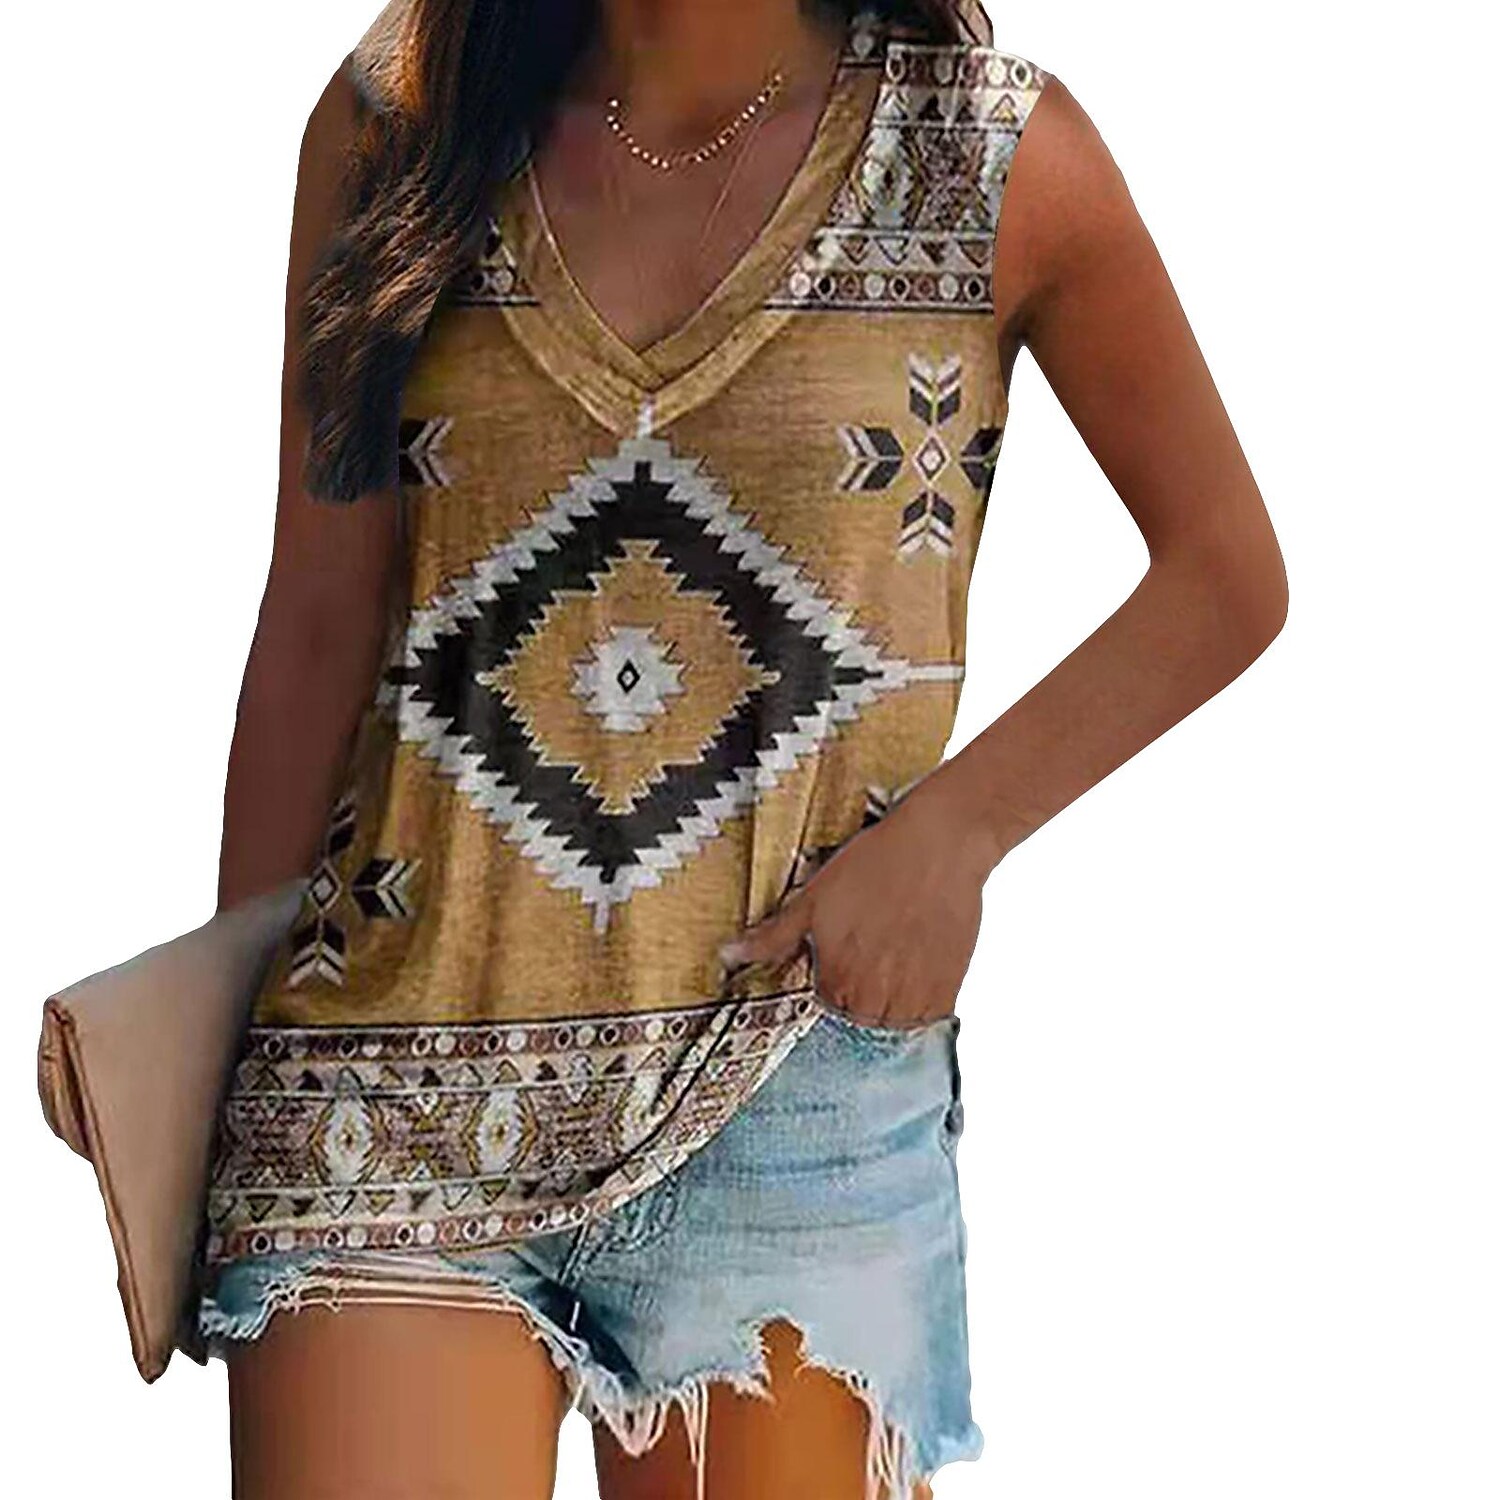 Women's new tops ethnic style printing sleeveless t-shirt vest